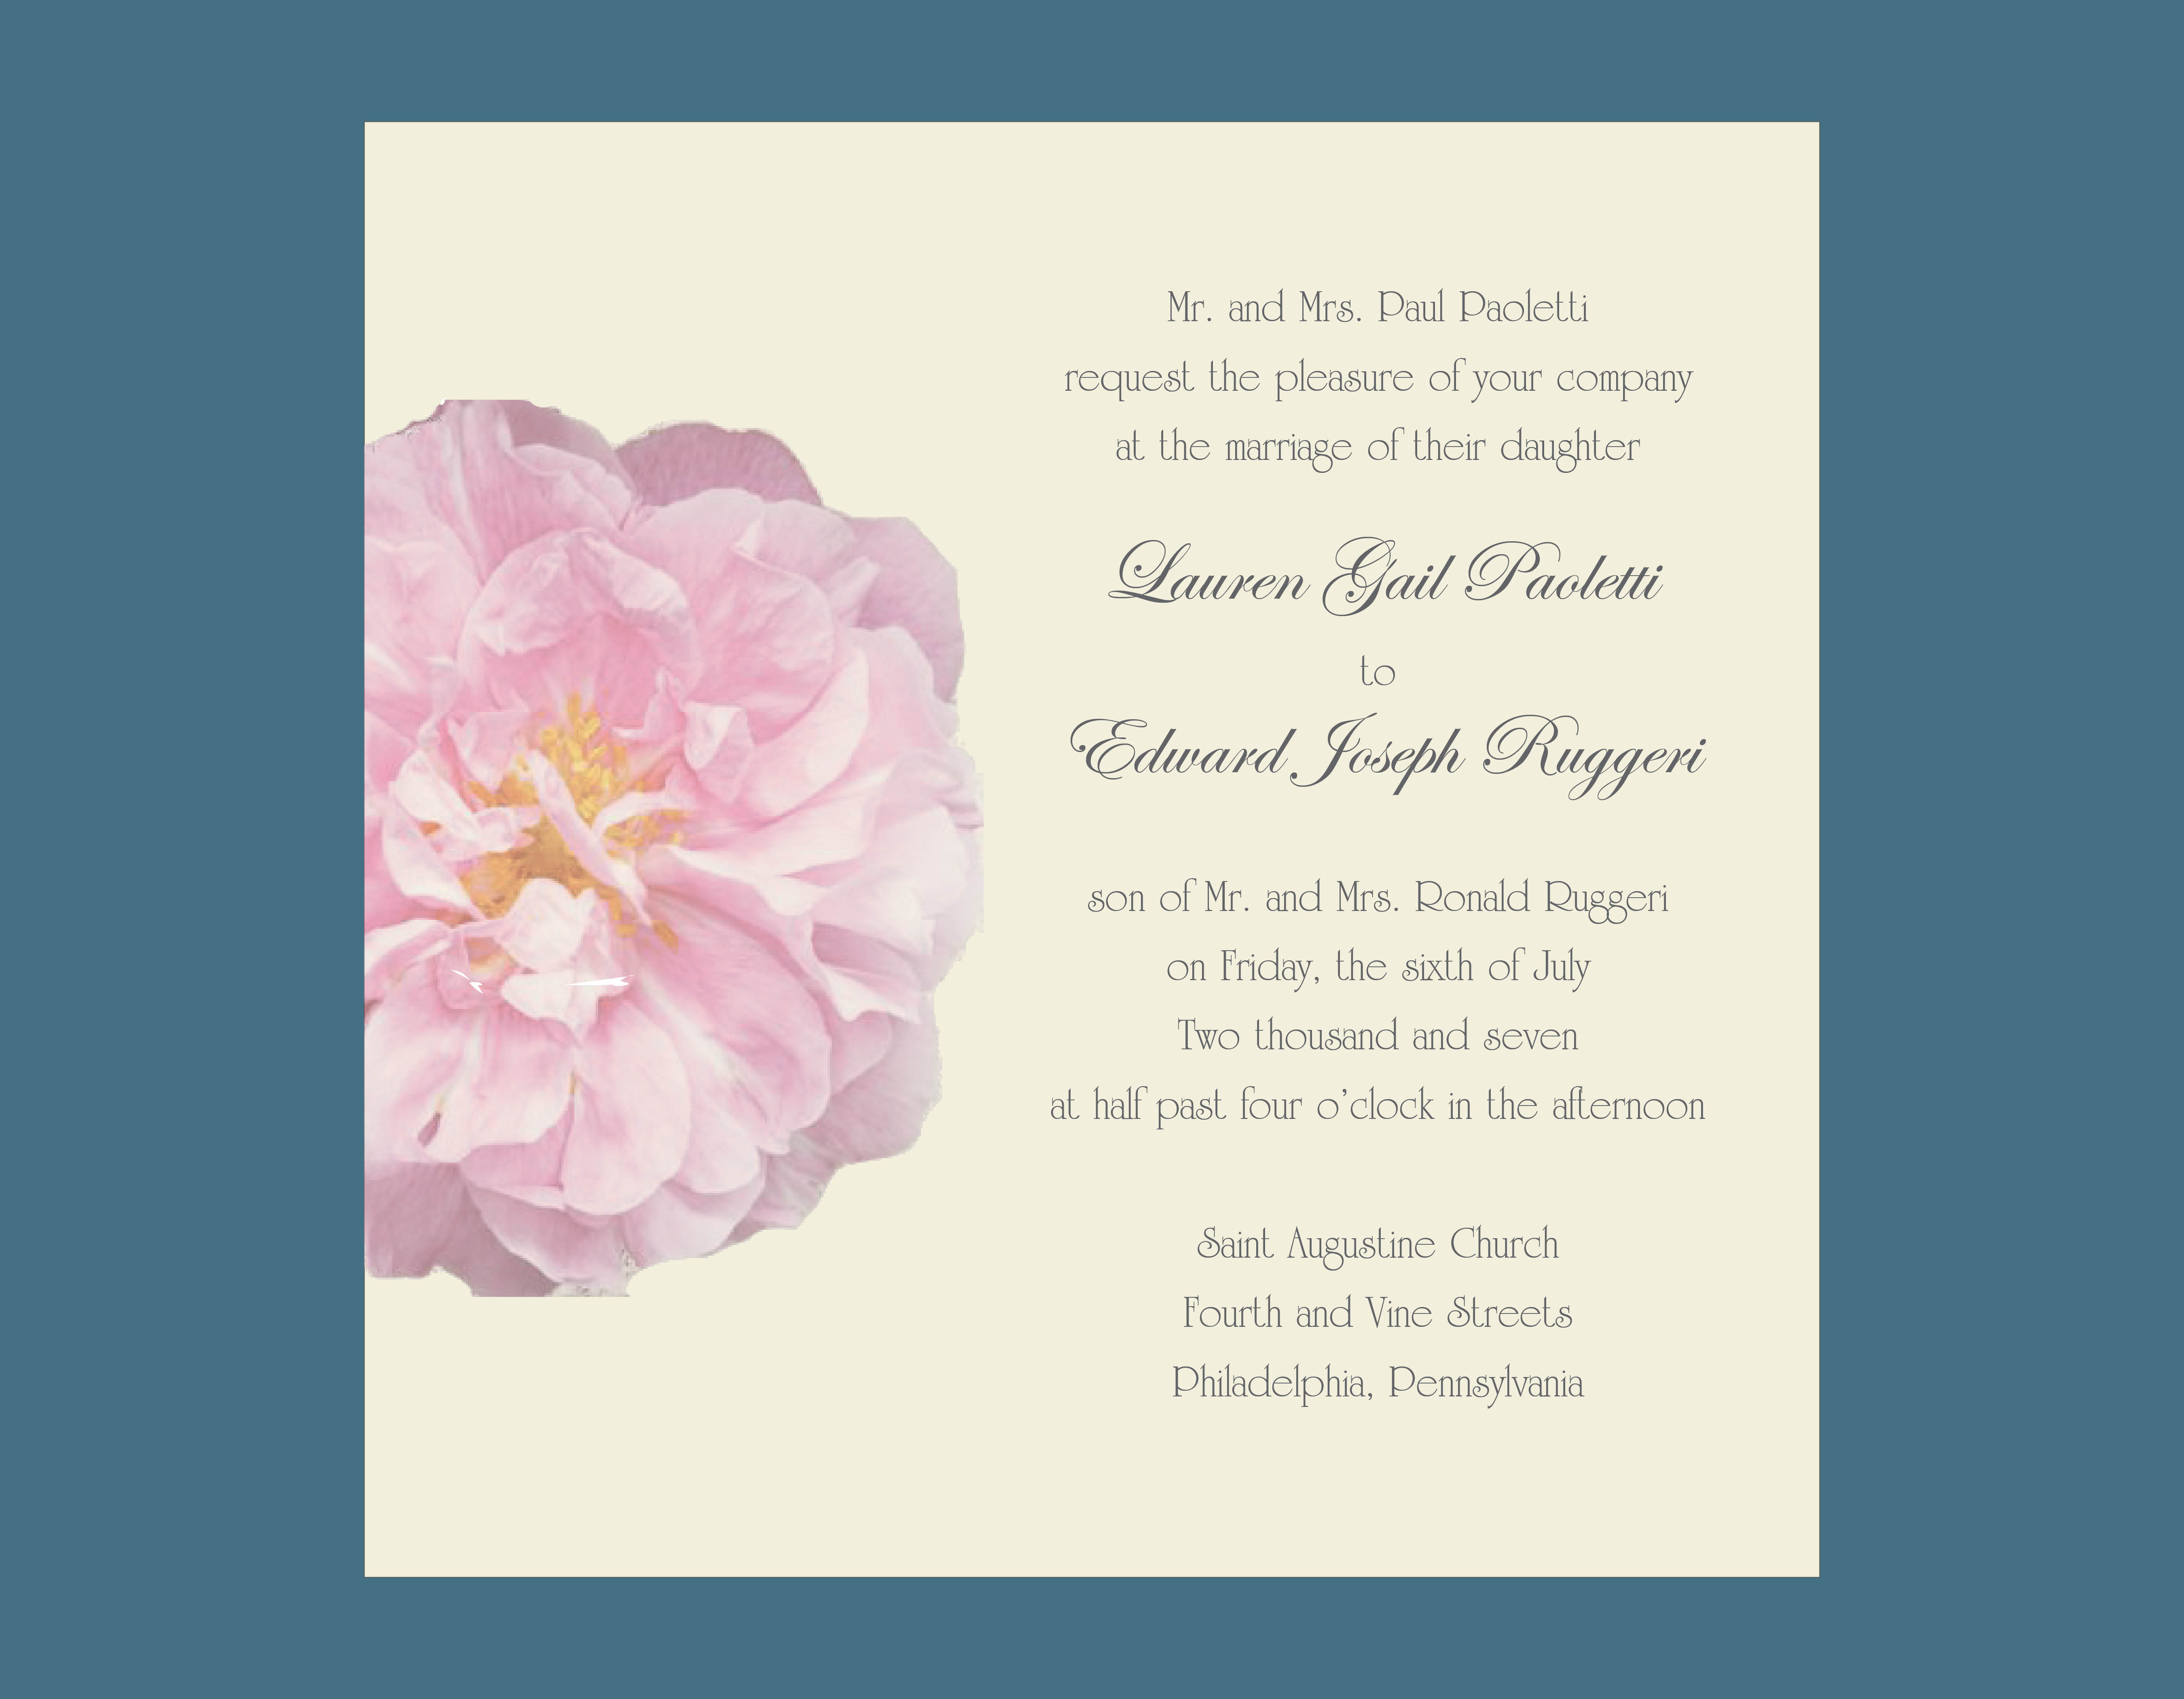 AGW Graphic Design - Ruggeri Wedding Invitation